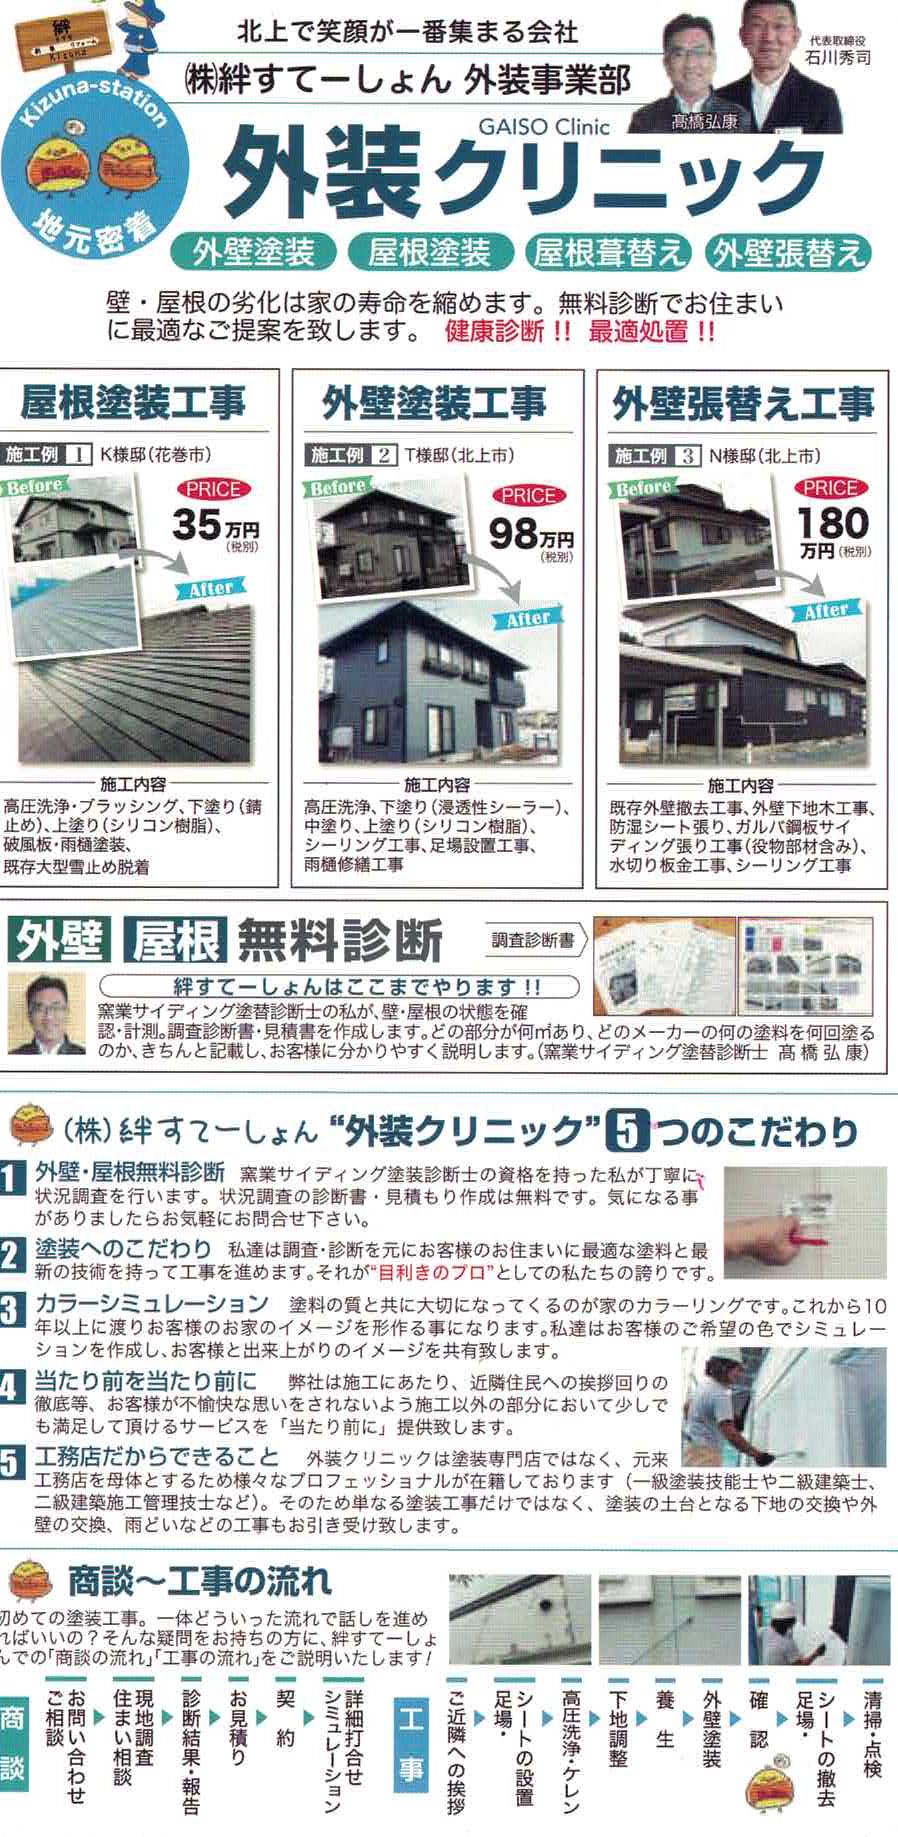 https://www.kizuna-station.com/blog01/Image/GAISO1.jpg